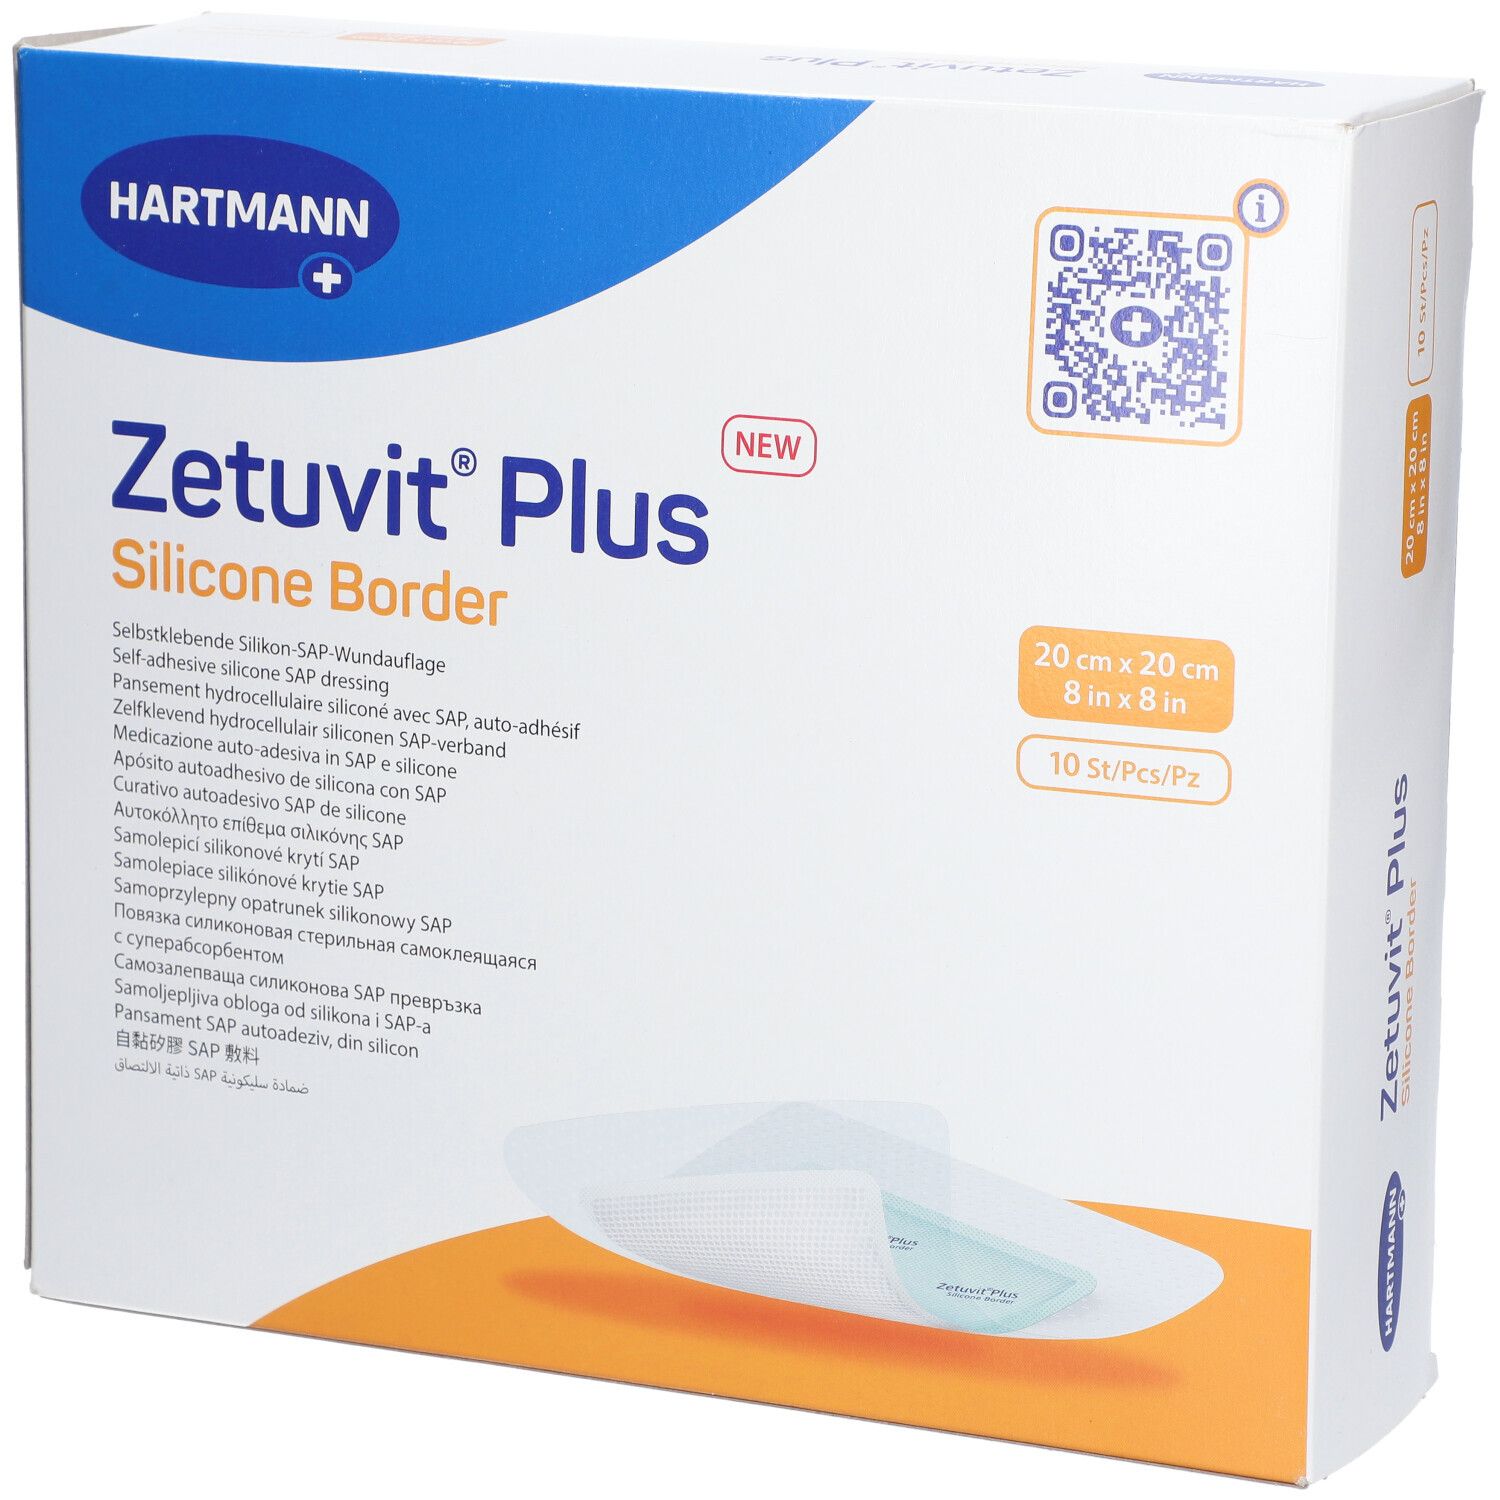 Zetuvit® Plus Silicone Border Selbstklebende Silikon-SAP-Wundauflage 20 x 20 cm